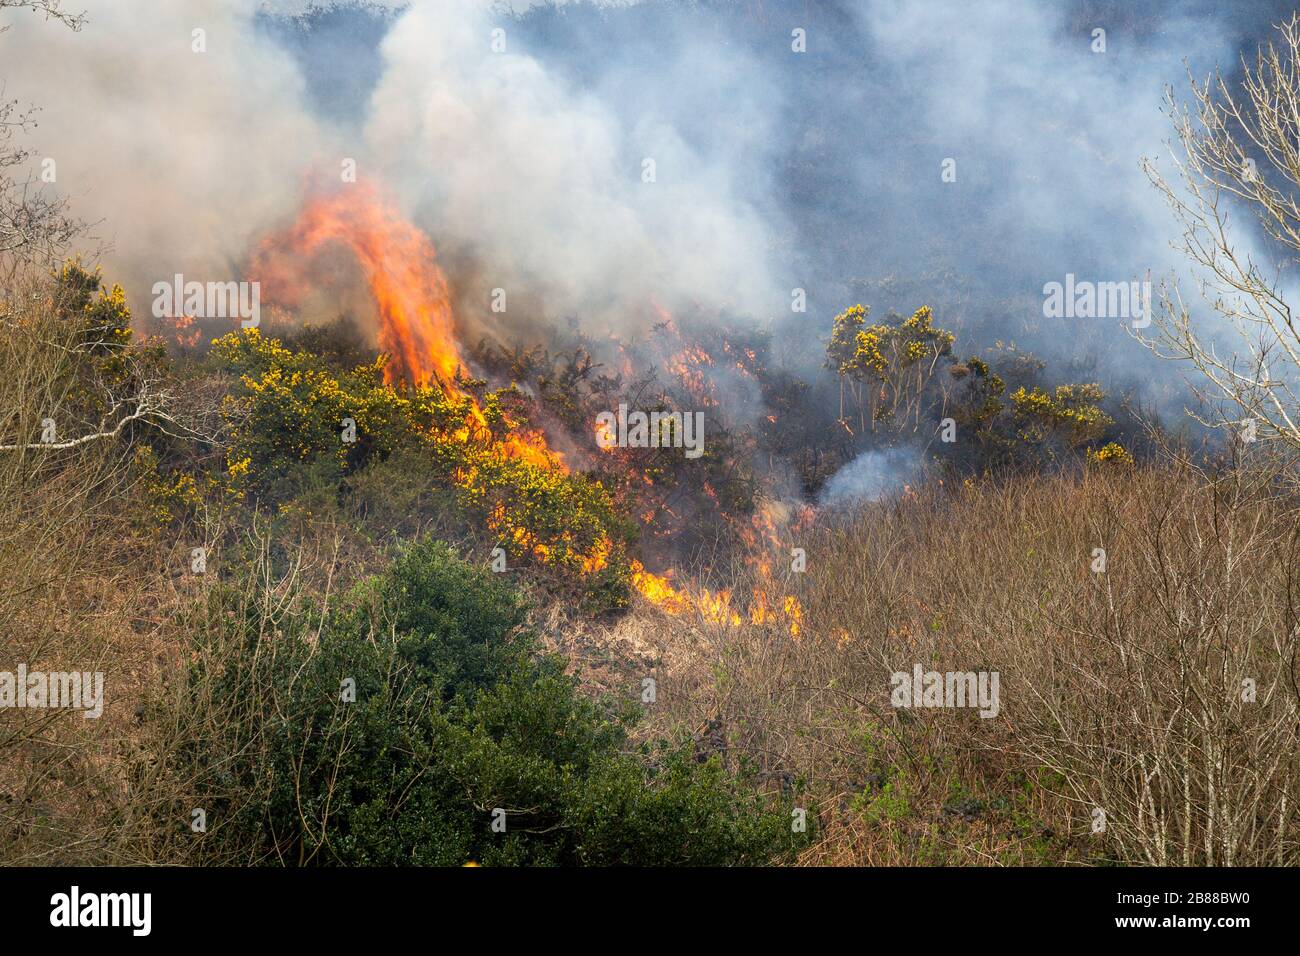 Gorse fire spreading across heathland Stock Photo